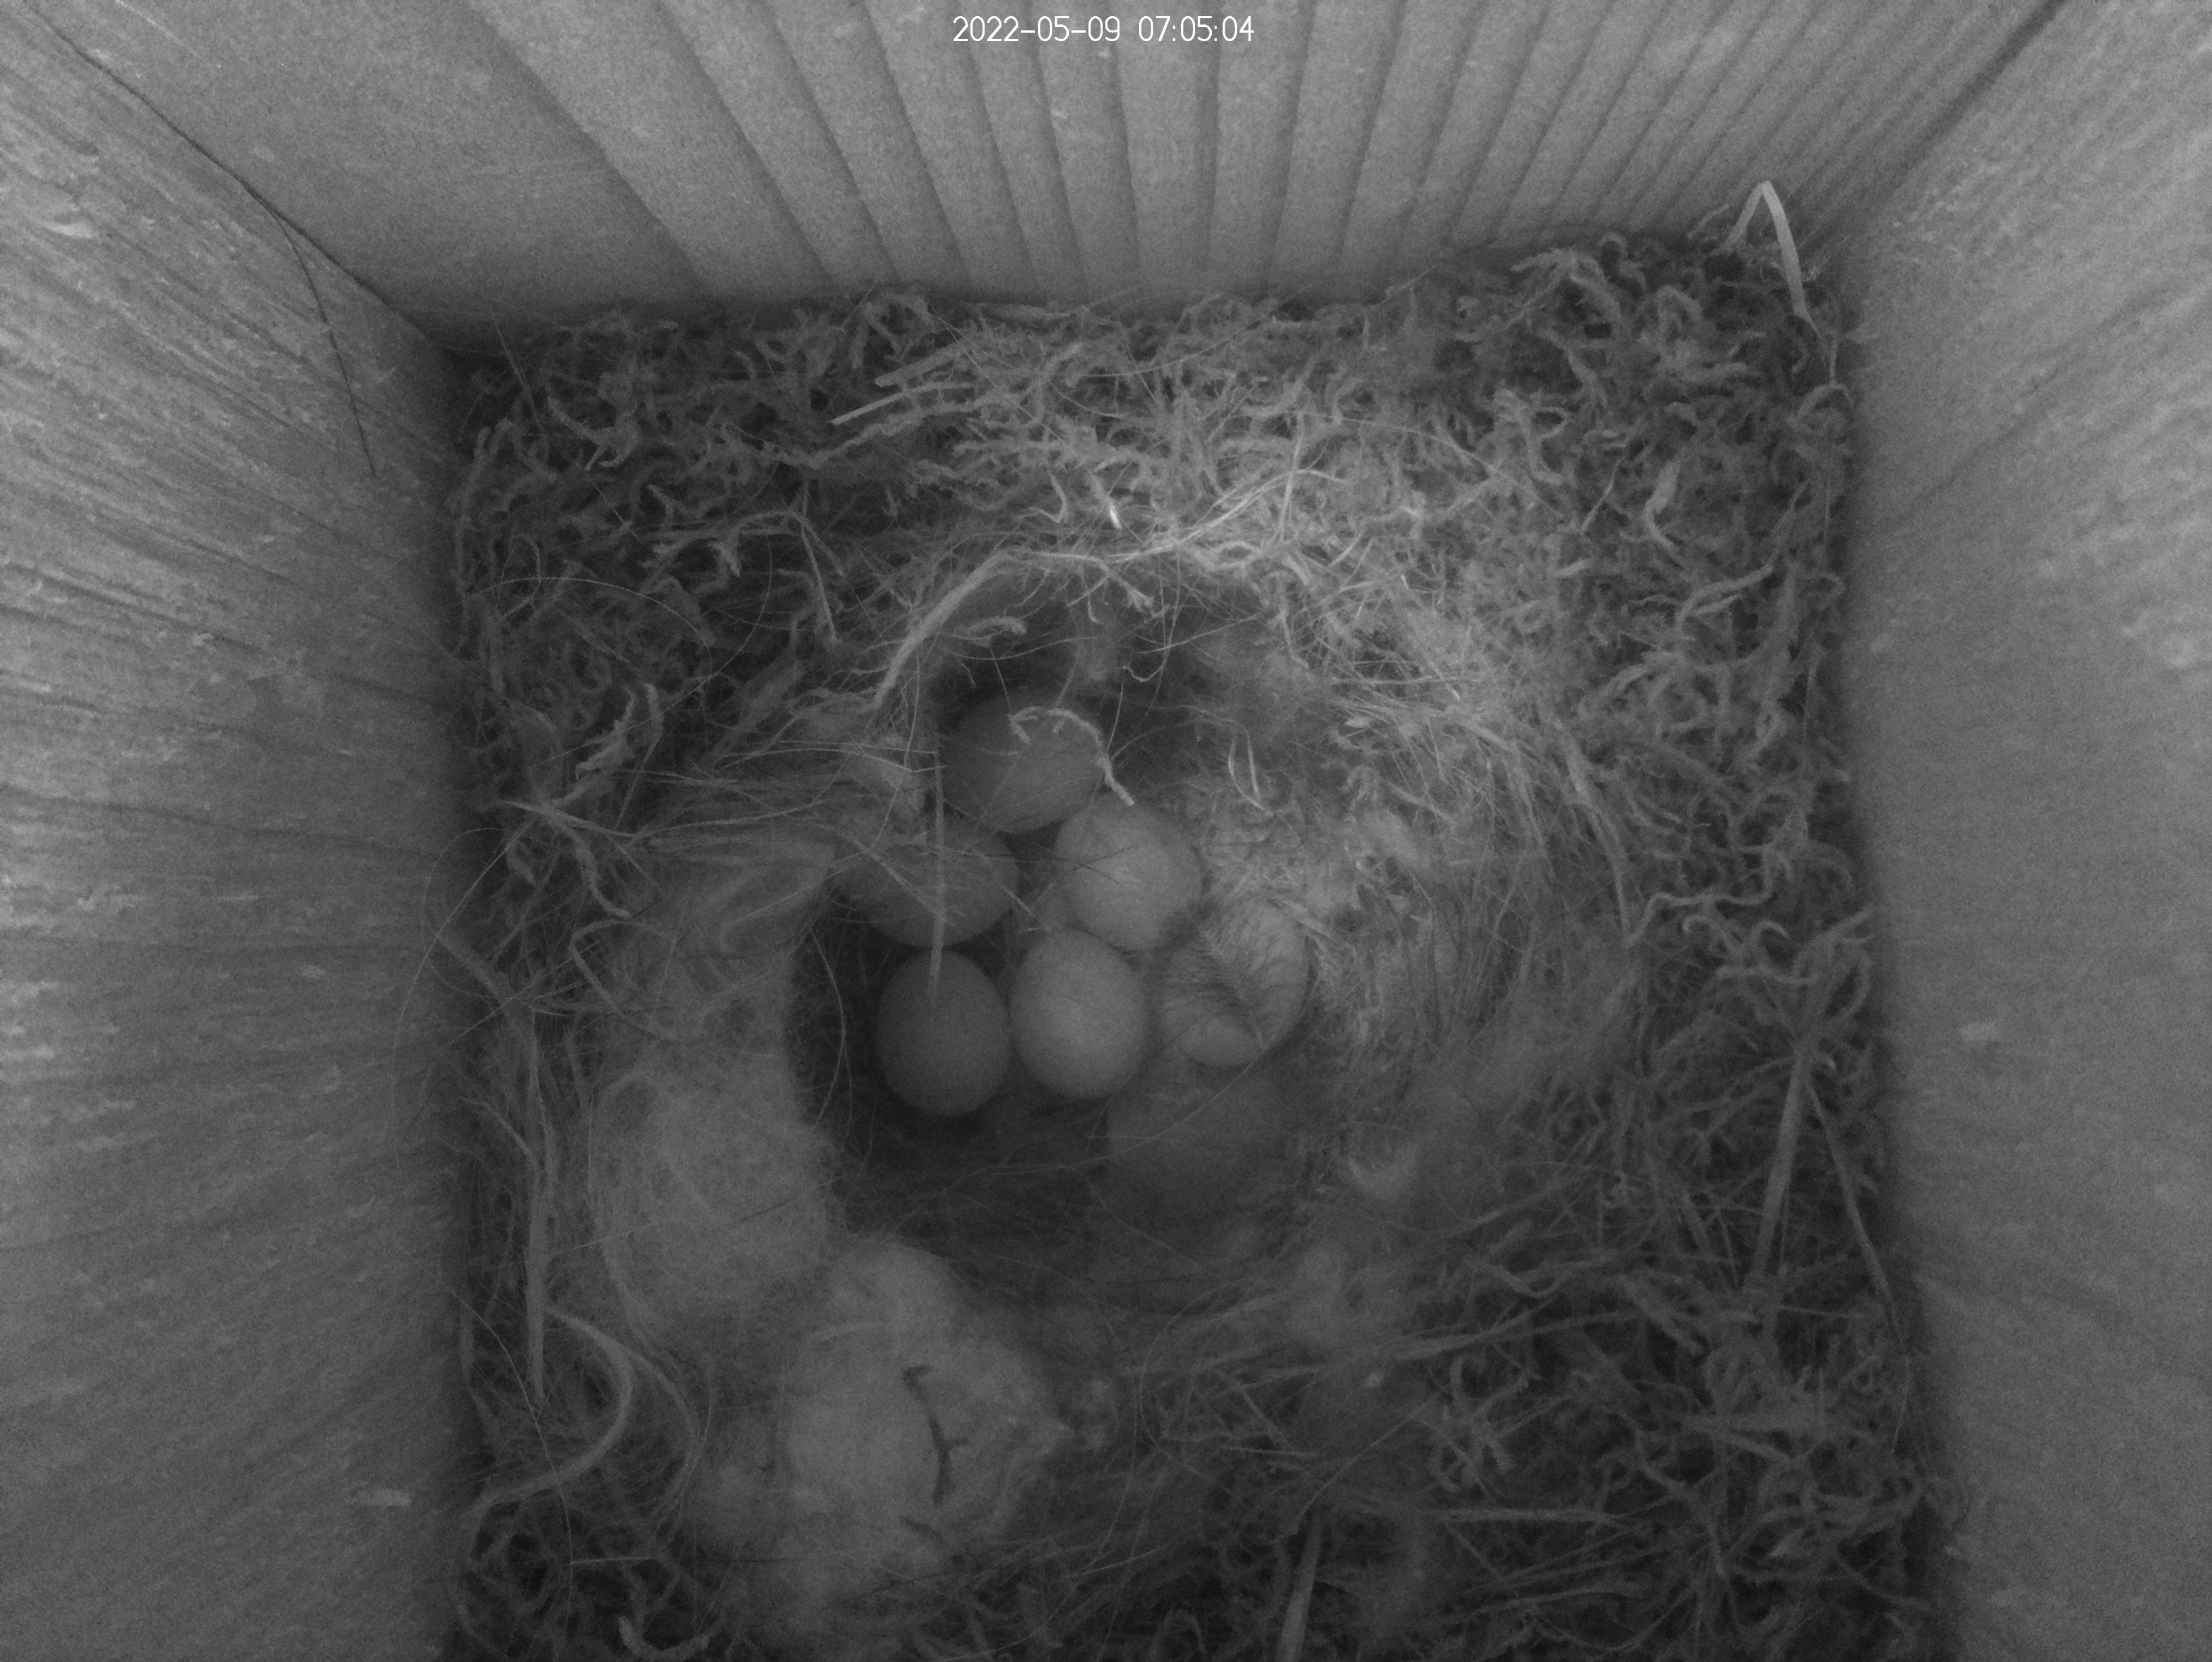 Bird nest with six eggs